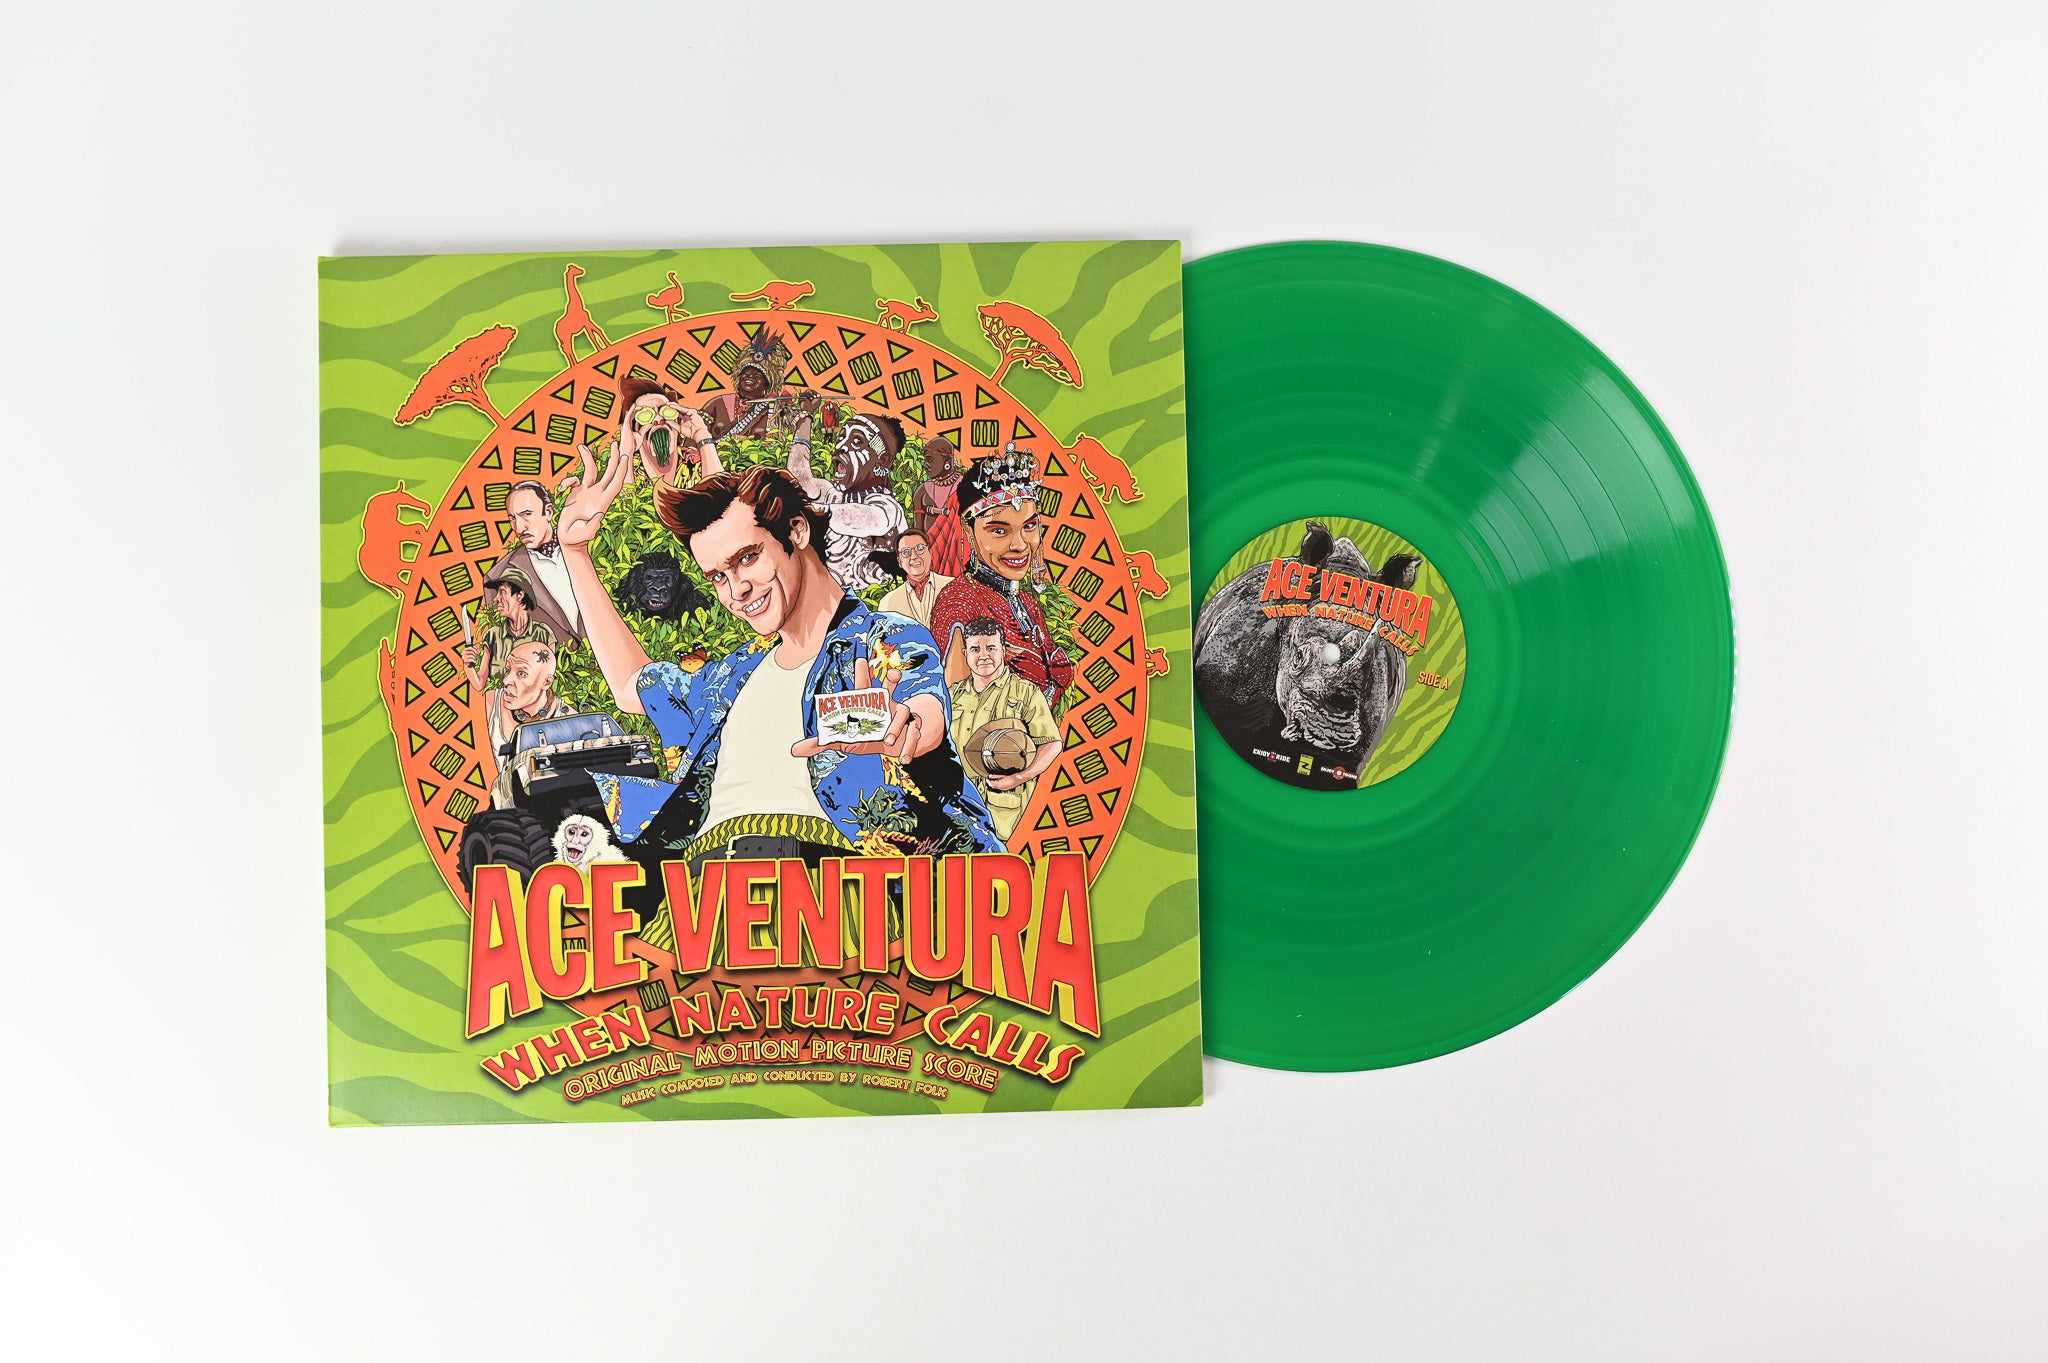 Robert Folk - Ace Ventura: When Nature Calls (Original Motion Picture Score) on Enjoy The Ride Records - Jungle Green Vinyl